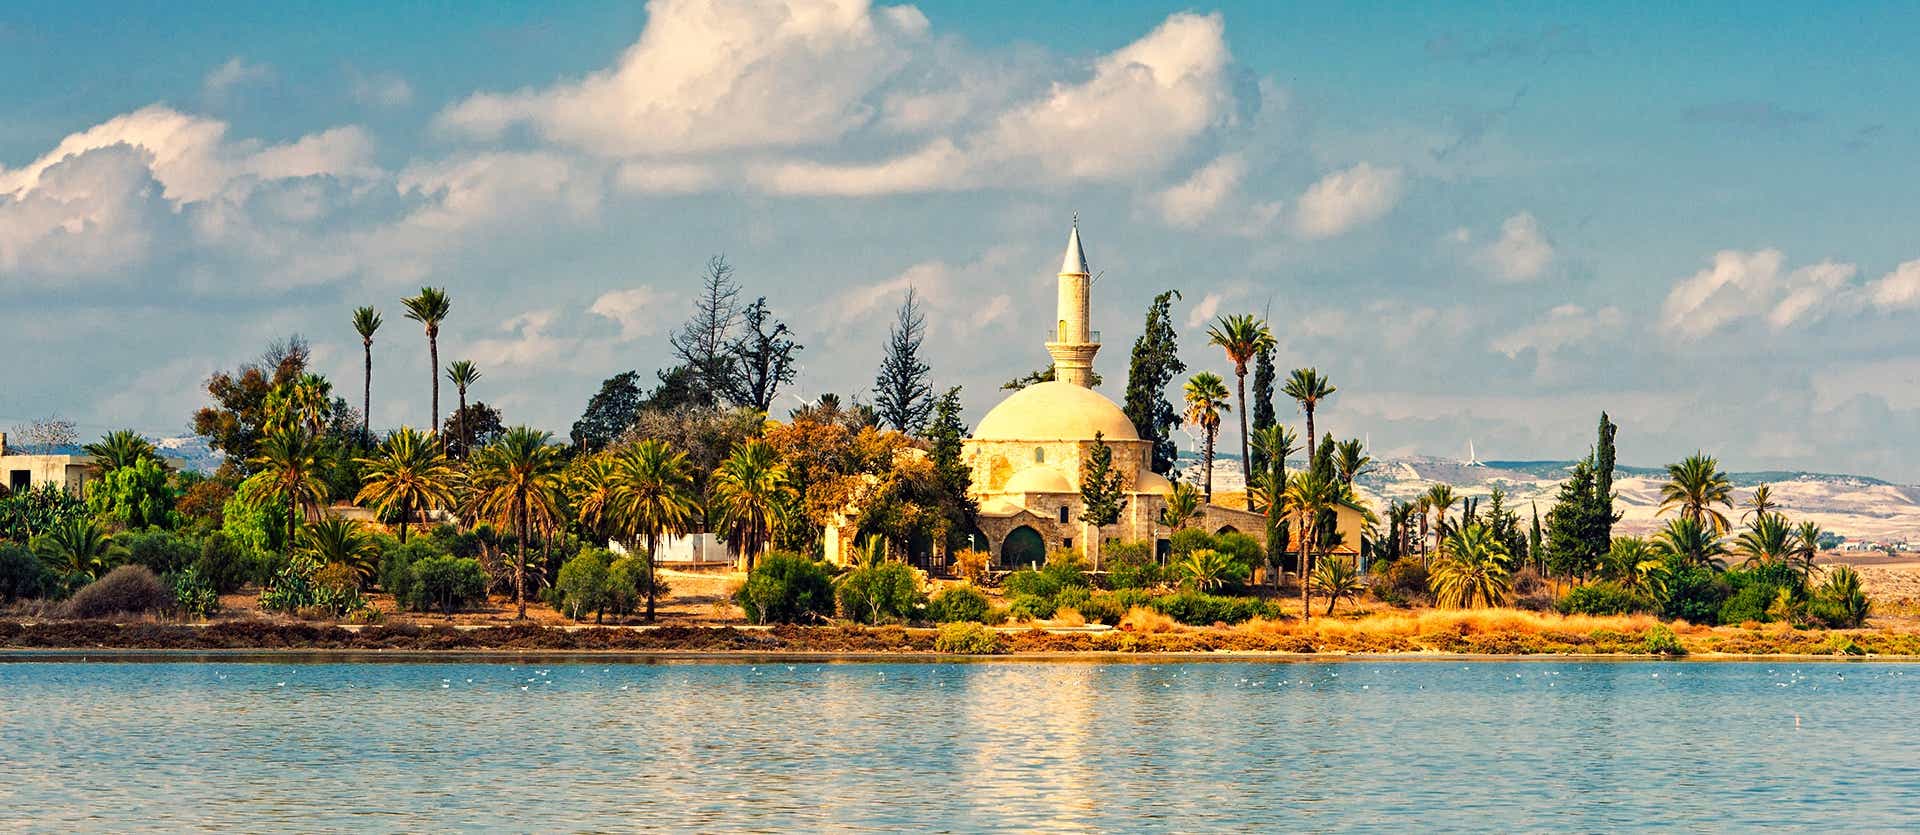 Hala Sultan Mosque <span class="iconos separador"></span> Larnaca